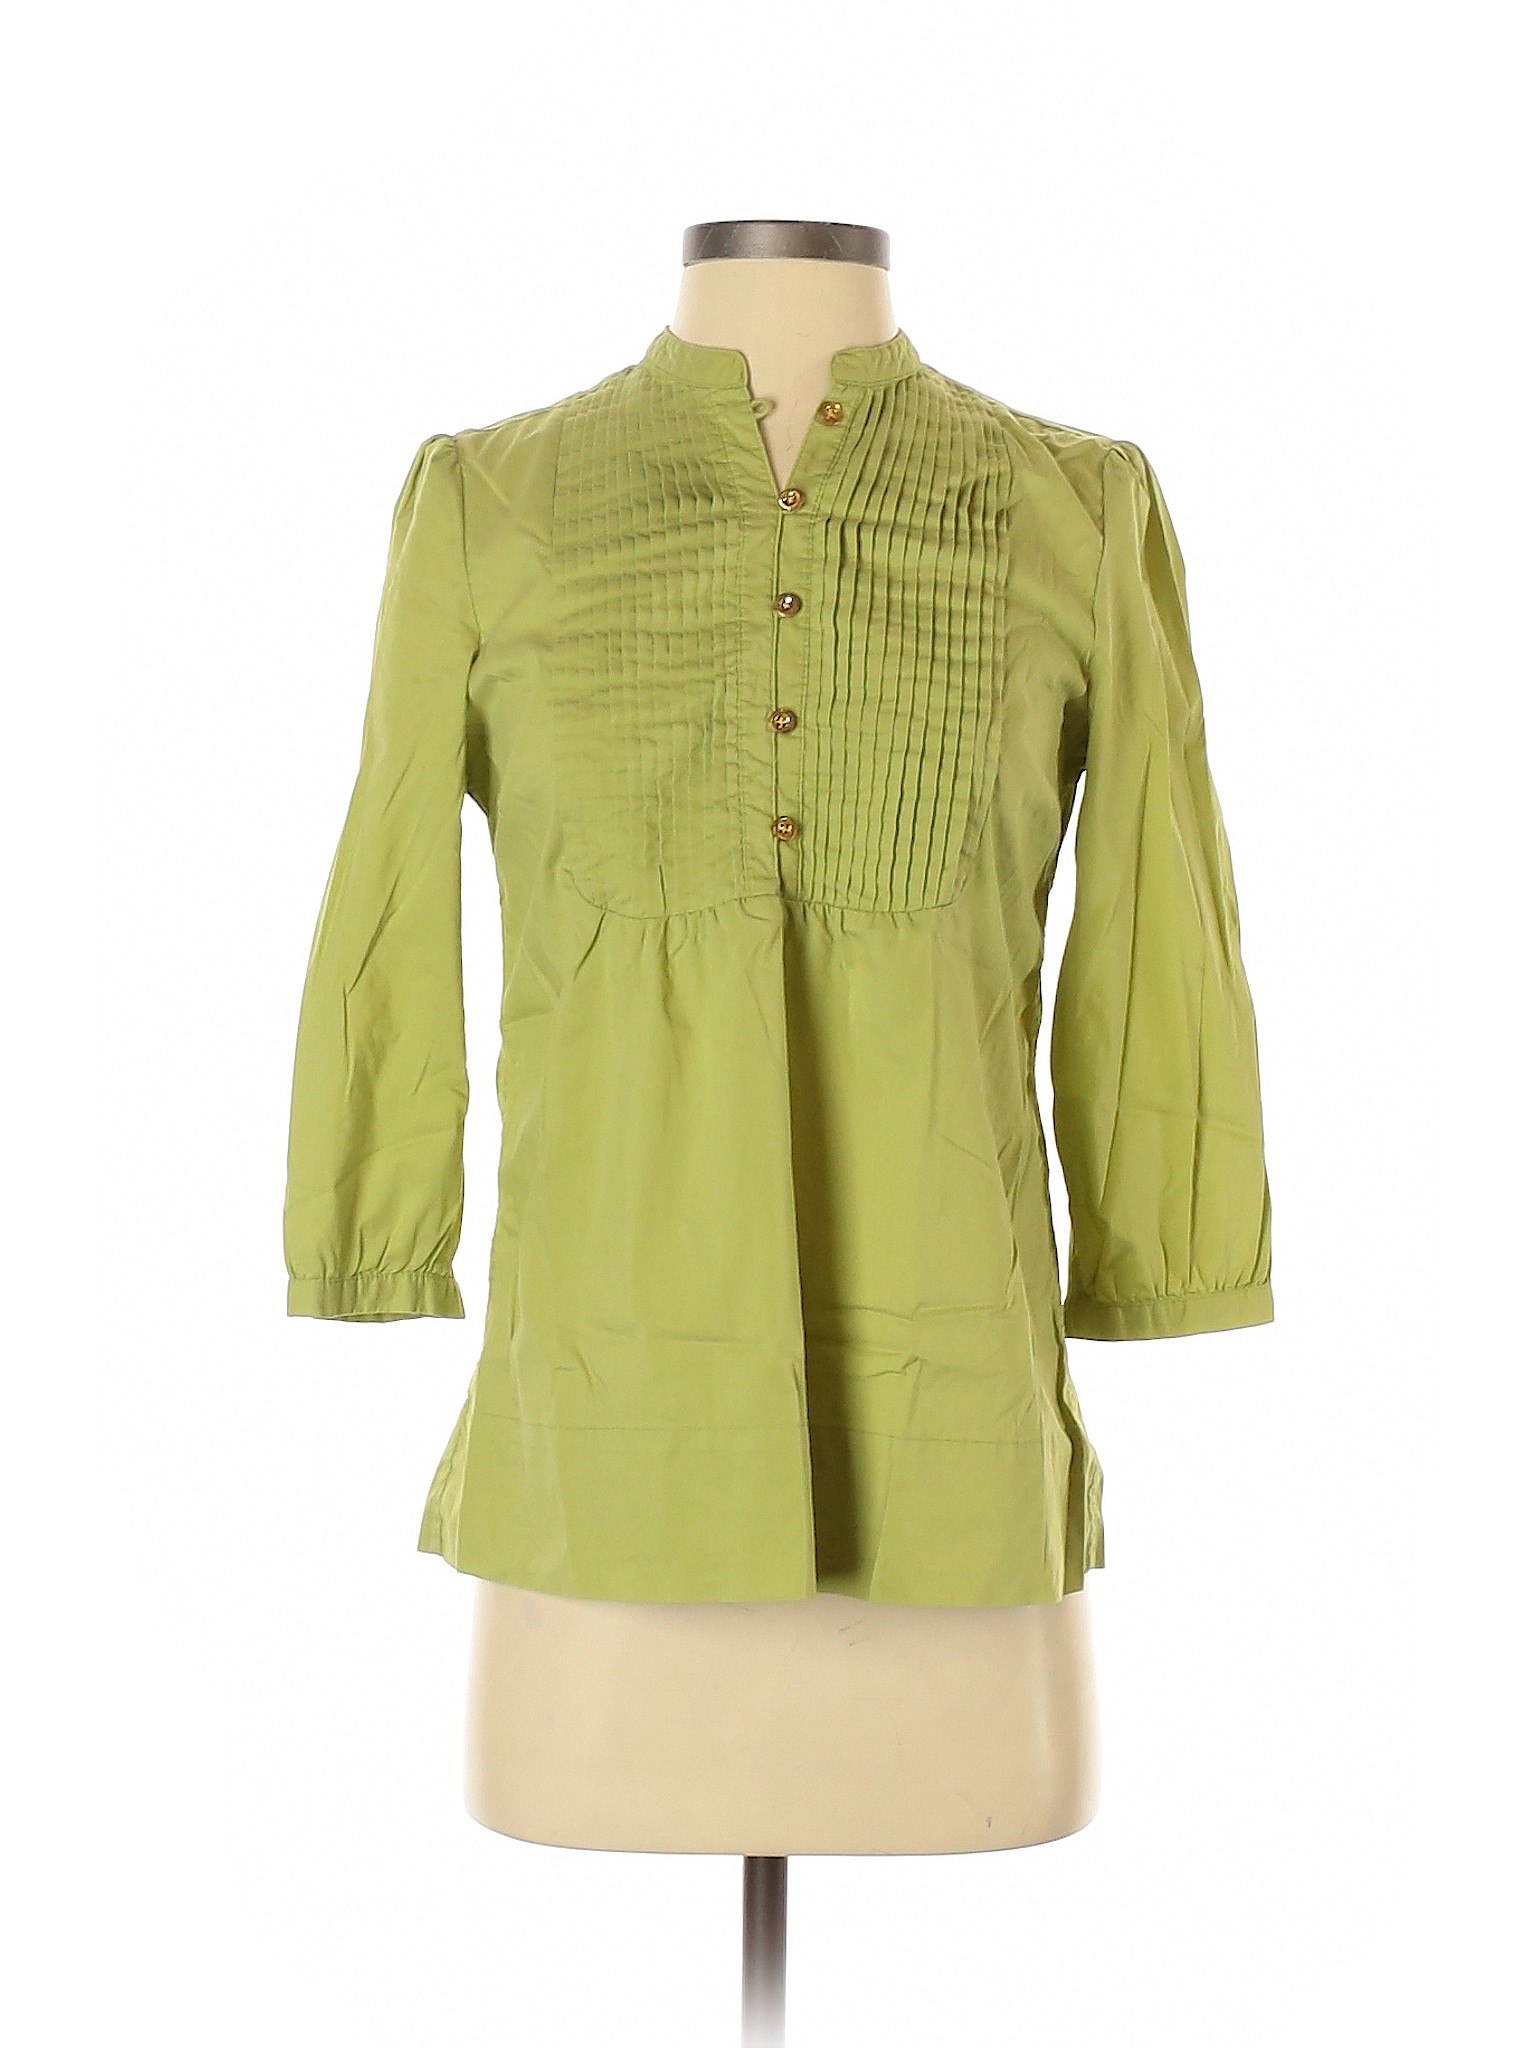 Banana Republic Factory Store Women Green 3/4 Sleeve Blouse S | eBay